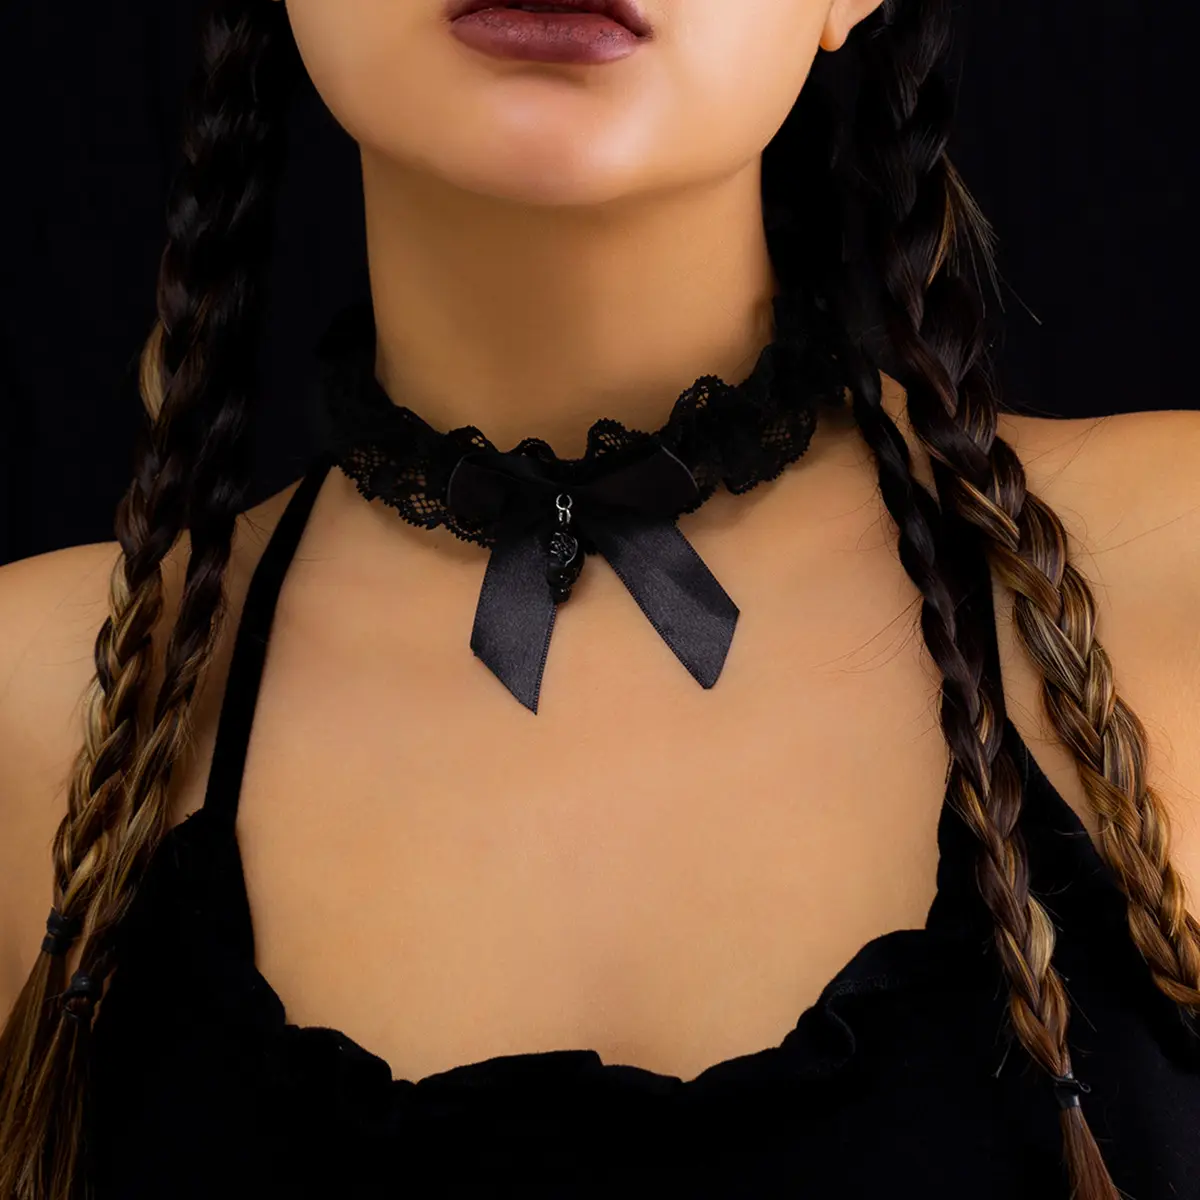 Fashion Jewelry Women's Bowknot Collar Chain Necklace Dark Retro Lace Necklace